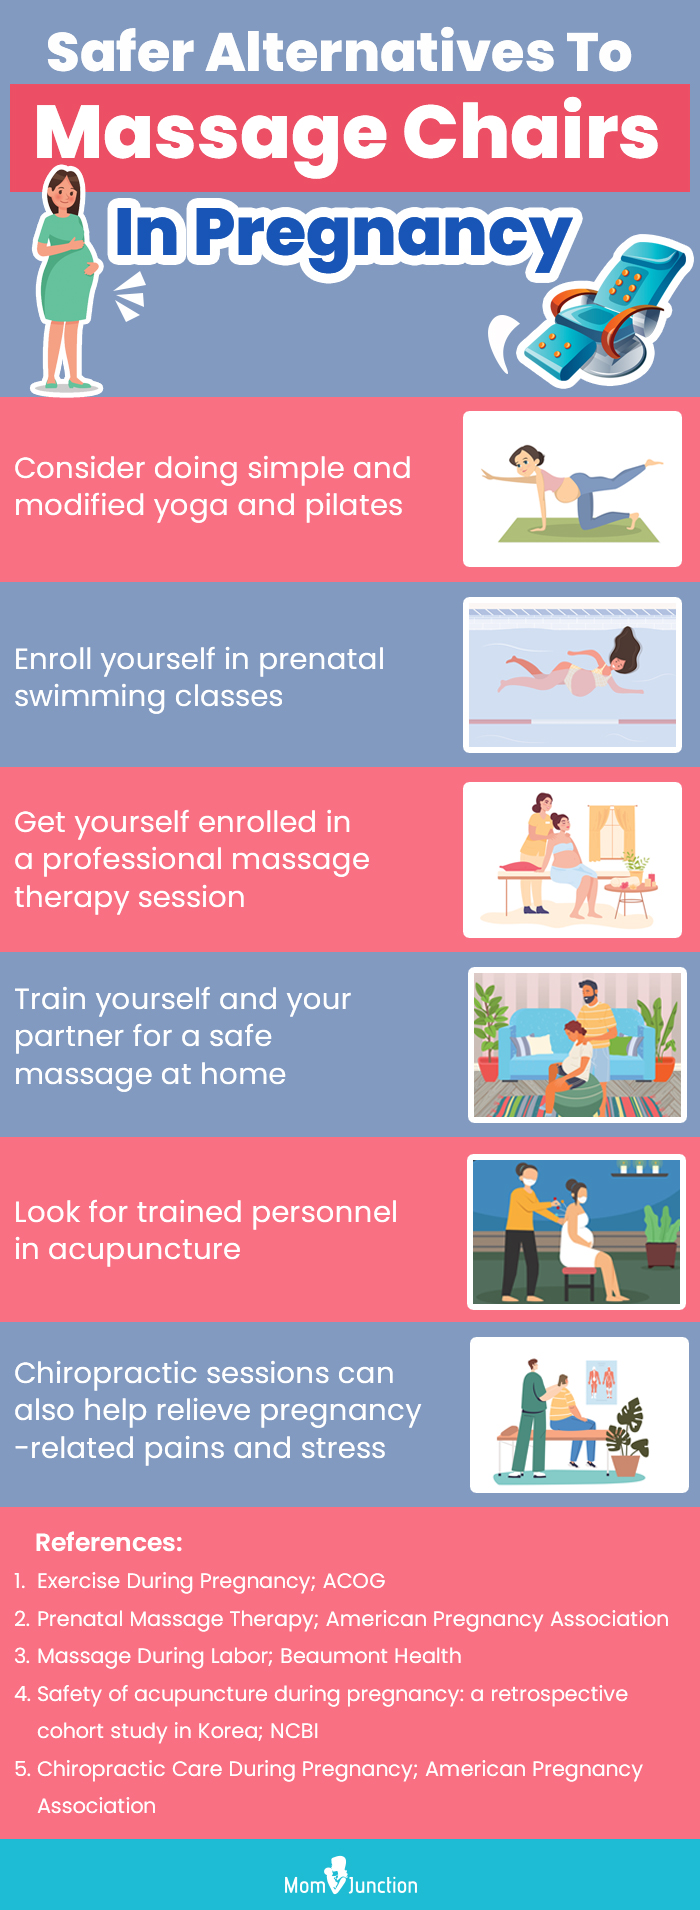 Pregnancy Massage: Benefits, Risks, and Safety